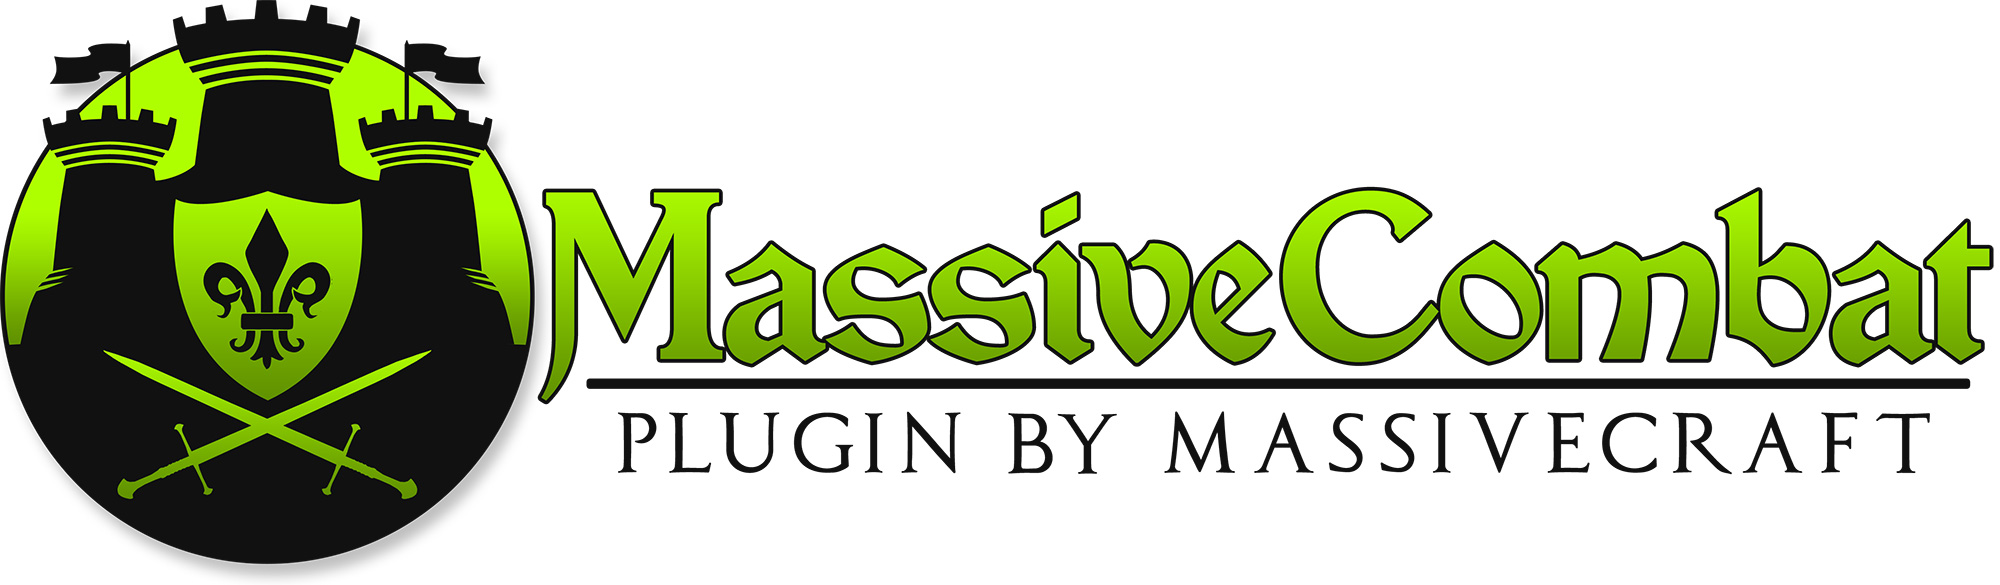 massivecraft-logotype-plugin-massivecombat-2000.jpg